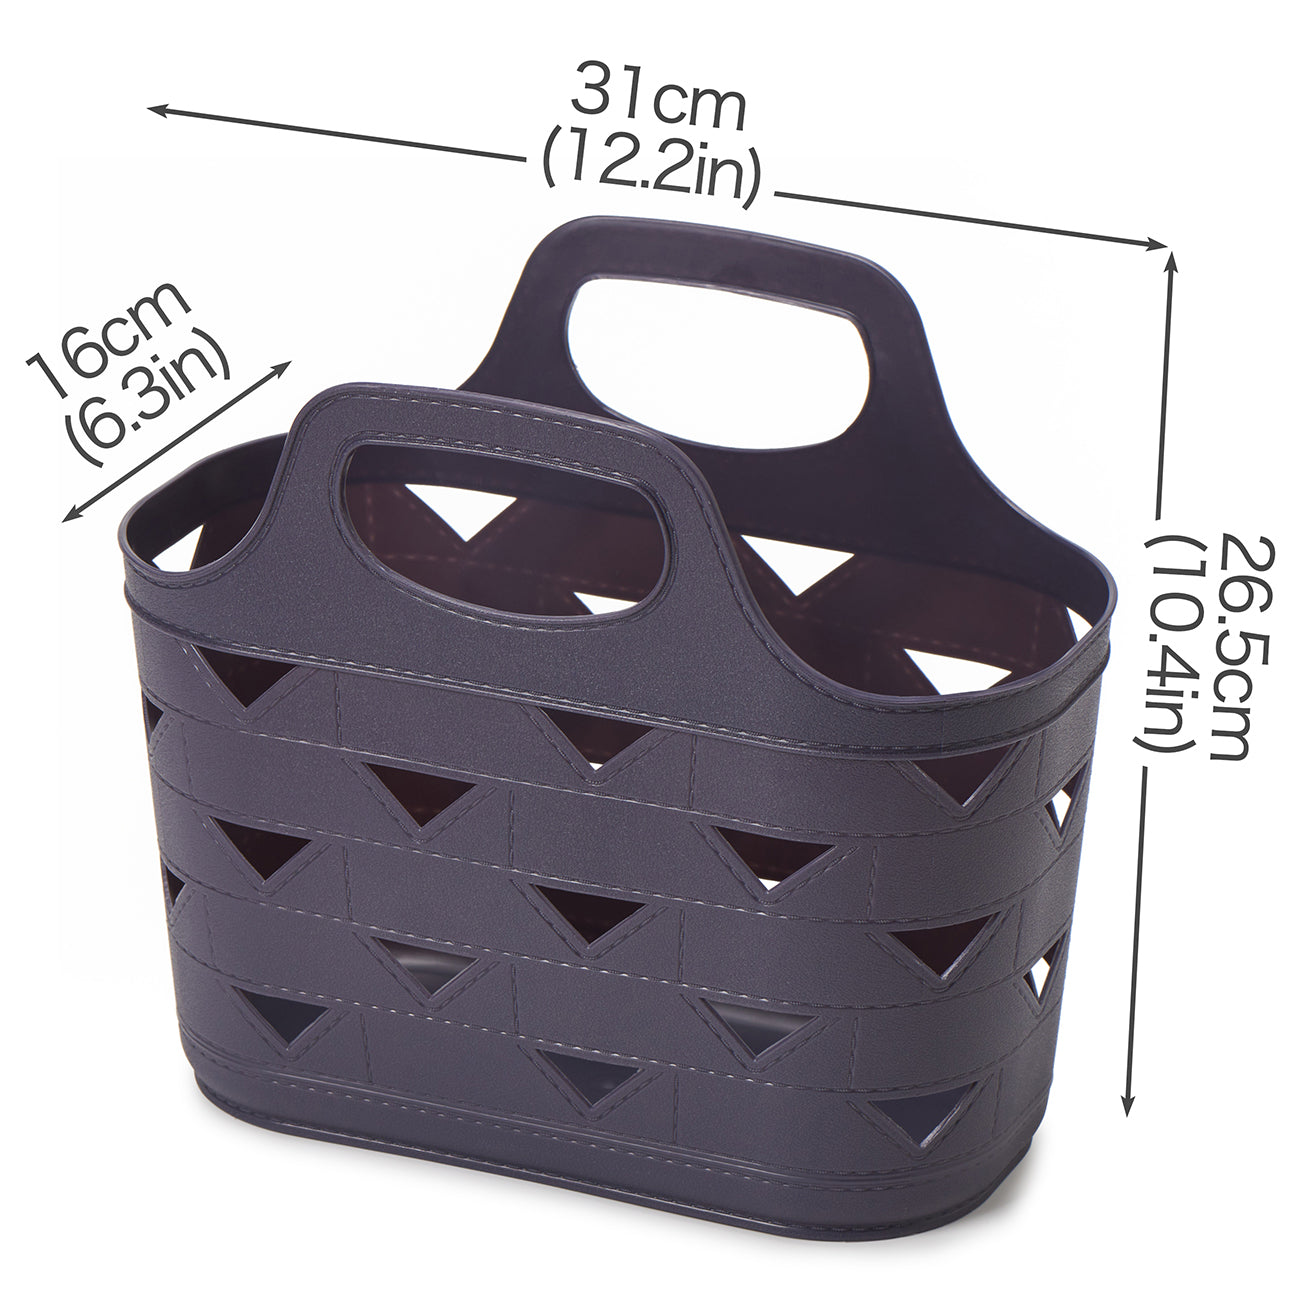 EZOWare Plastic Tote Storage Baskets, Set of 6 Portable Bathroom Caddy